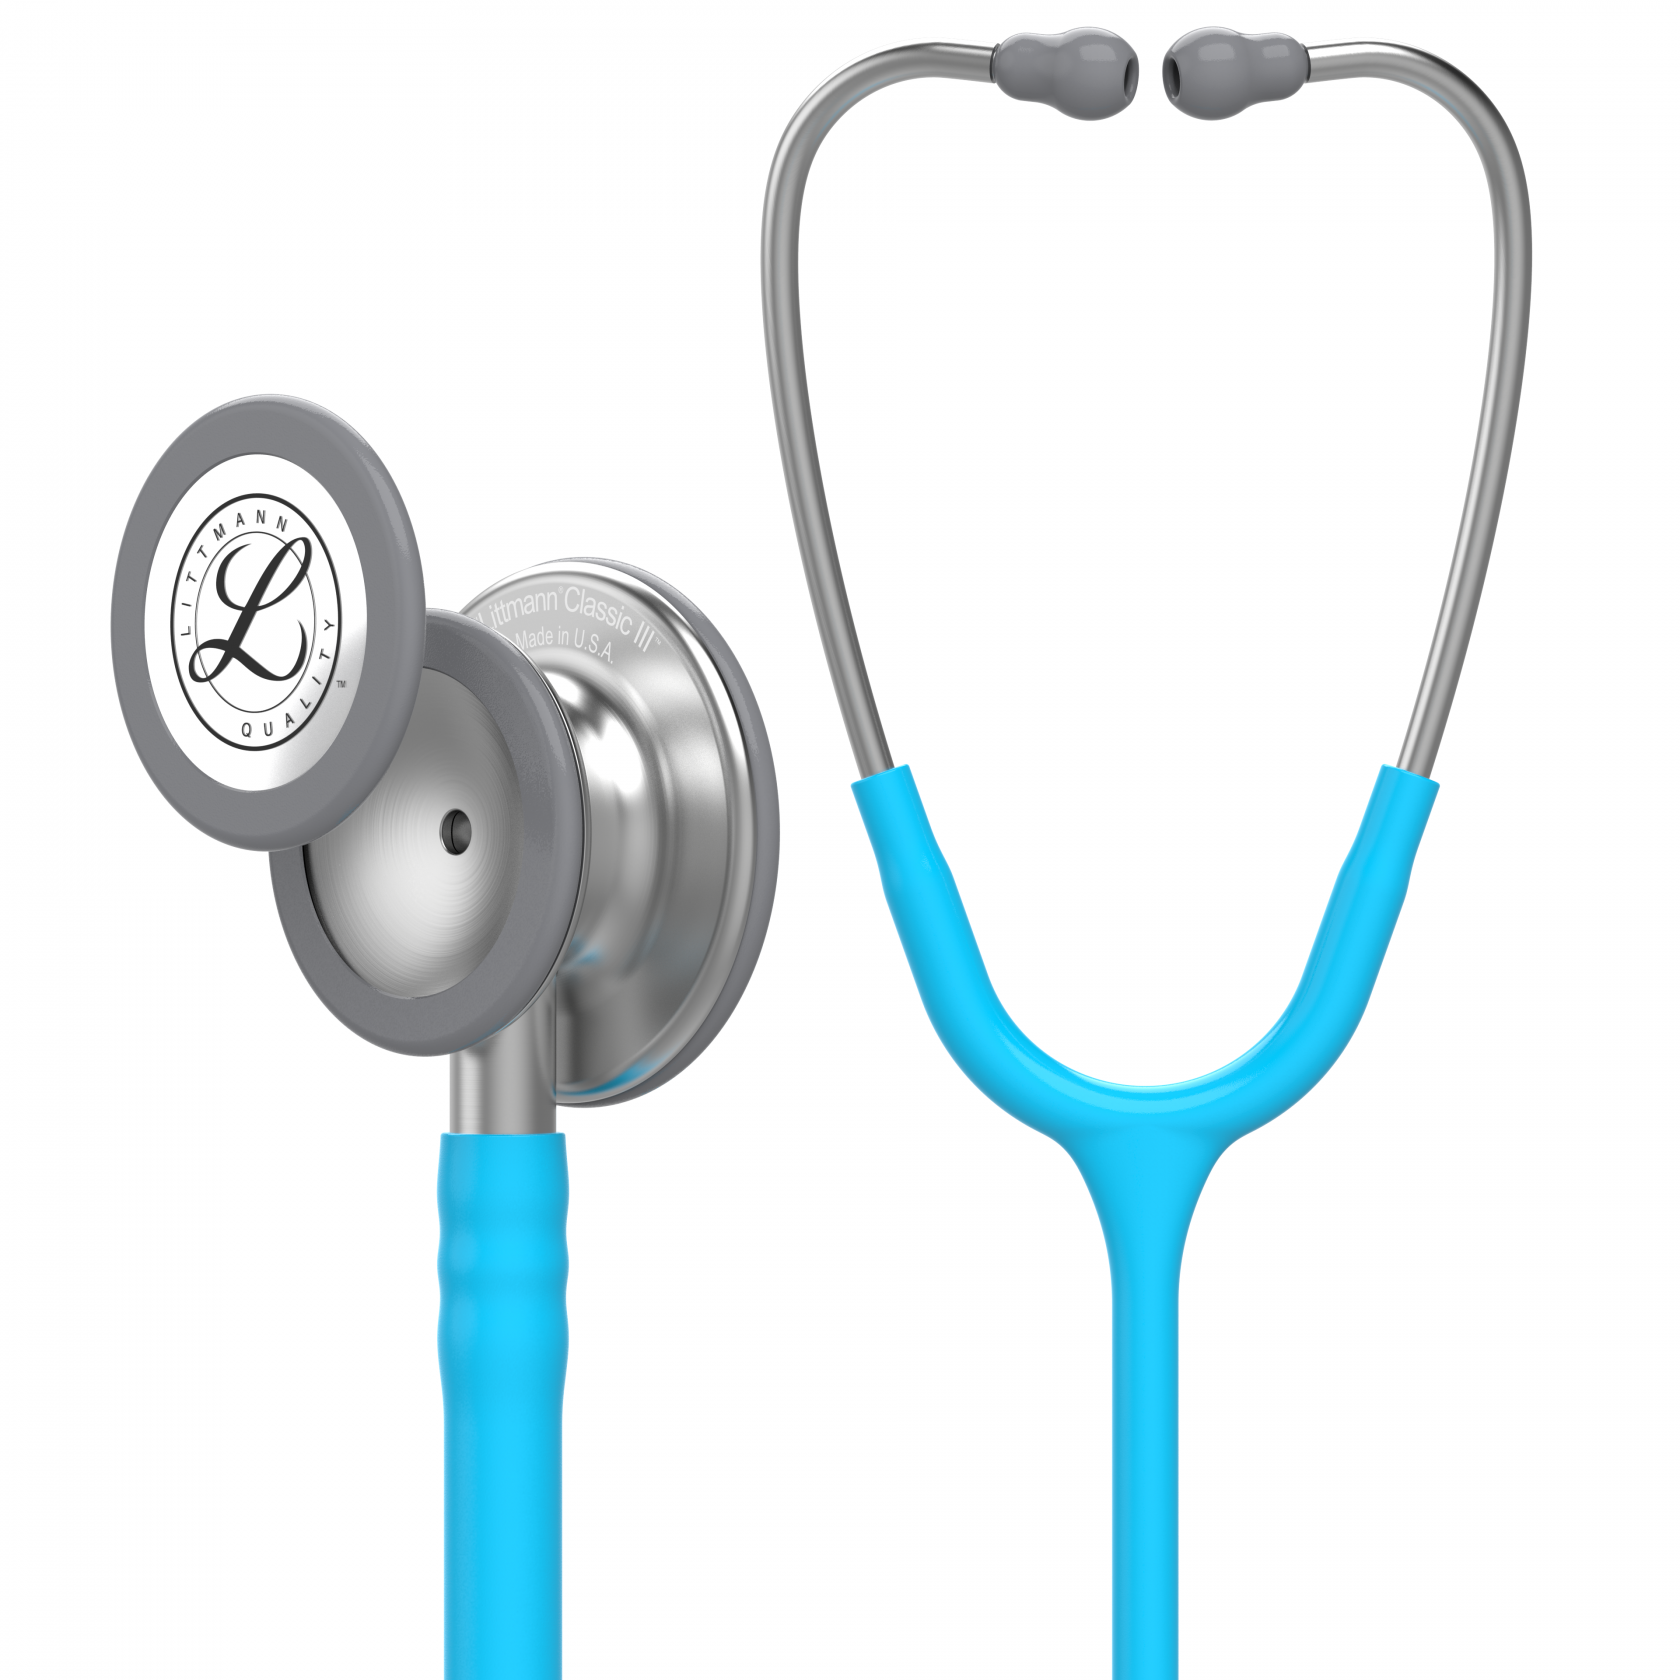 3M Stethoscope Littmann Classic III Turquoise image 1